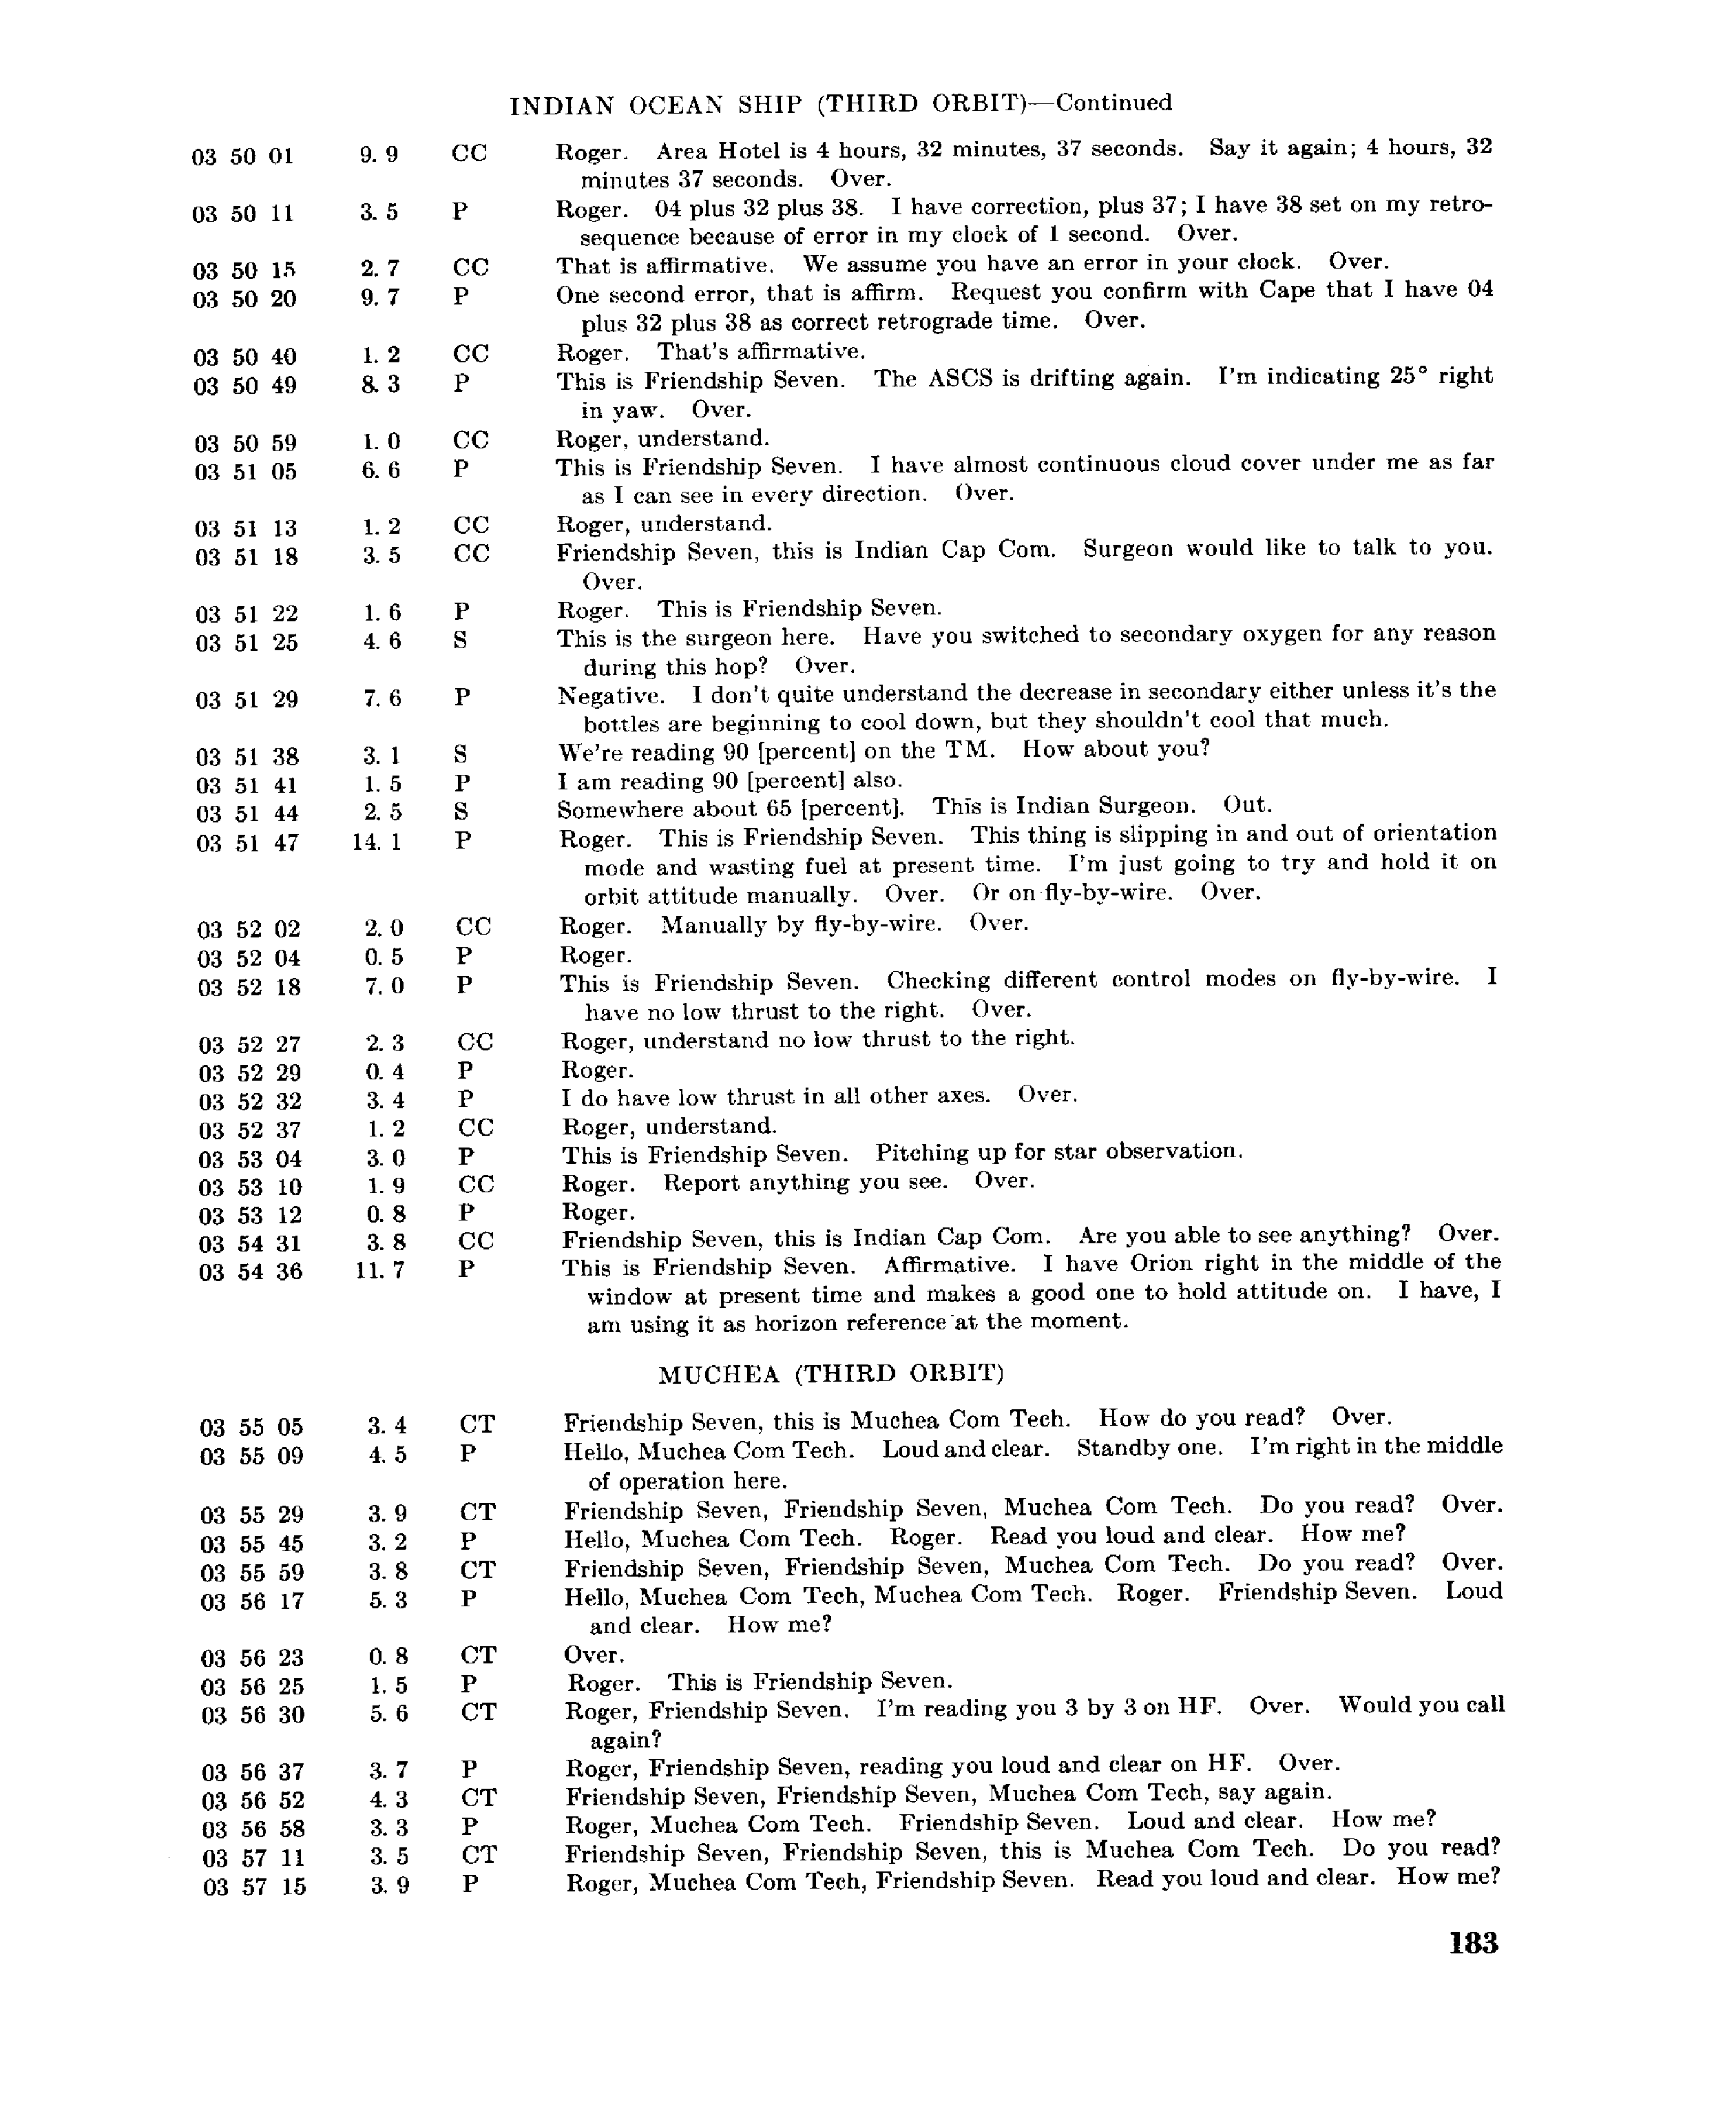 Page 182 of Mercury 6’s original transcript